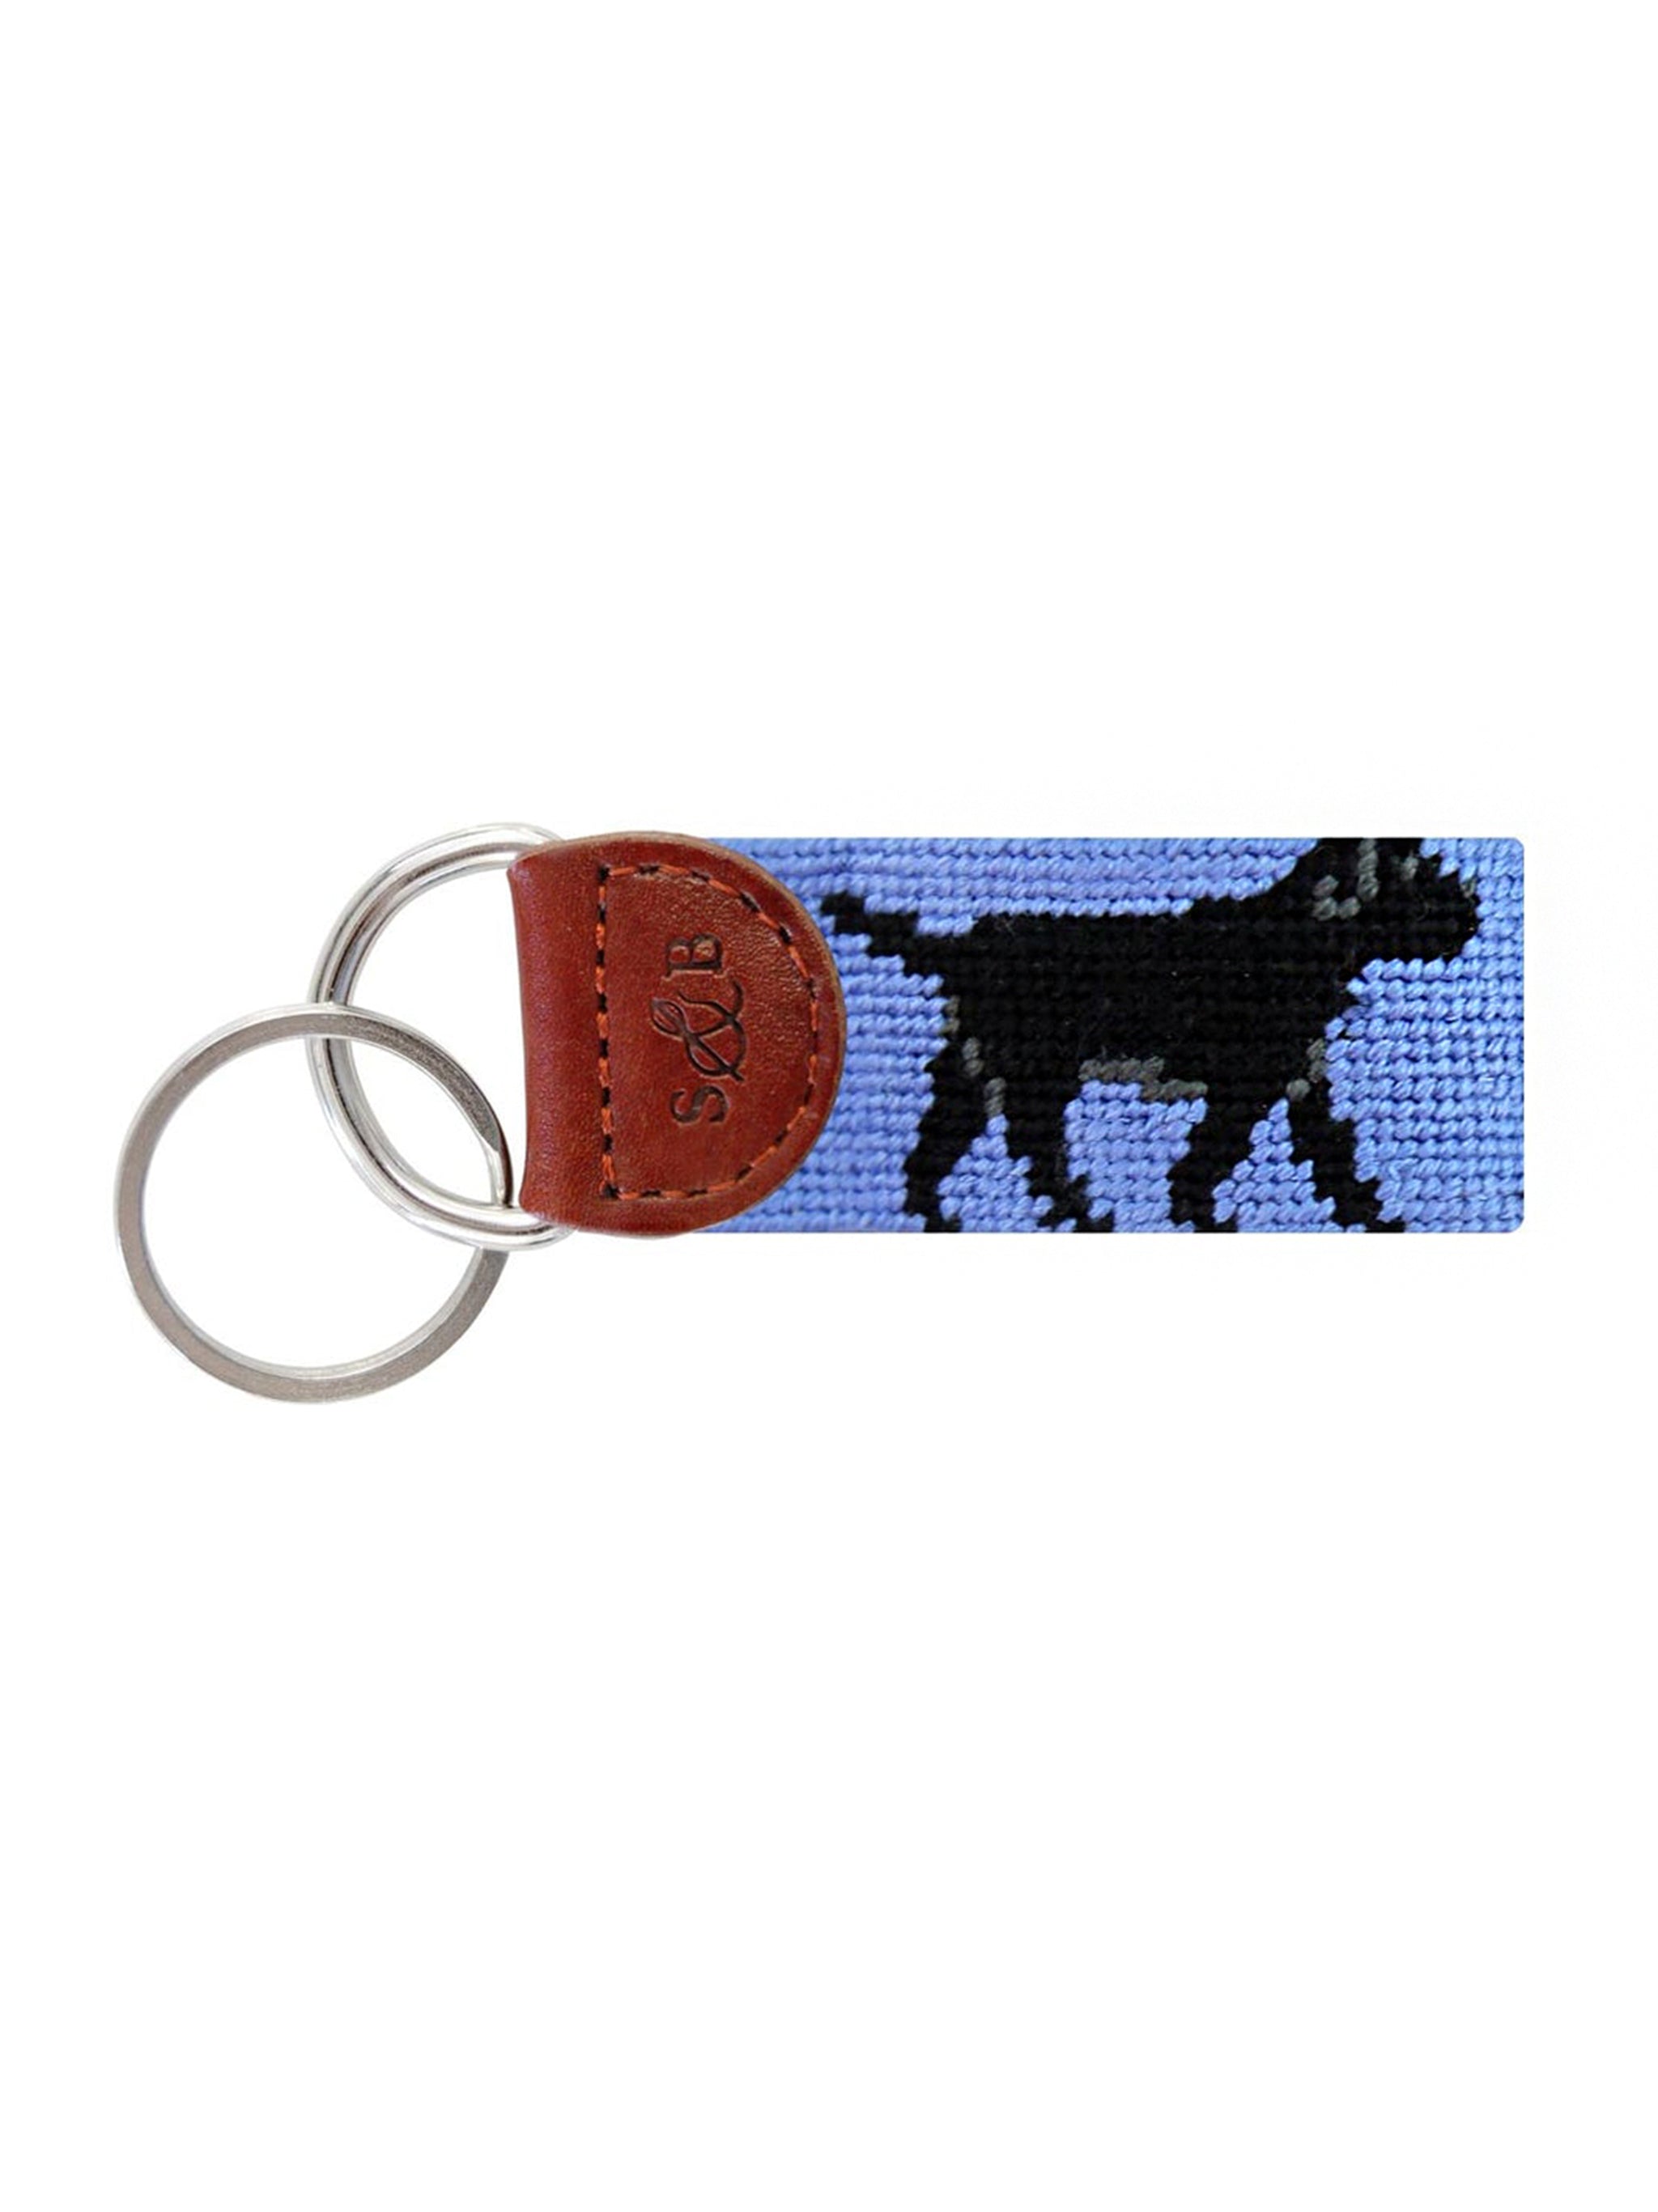 Dash the Dog Keychain / Needlepoint Key Fob / Dog Keychain / 